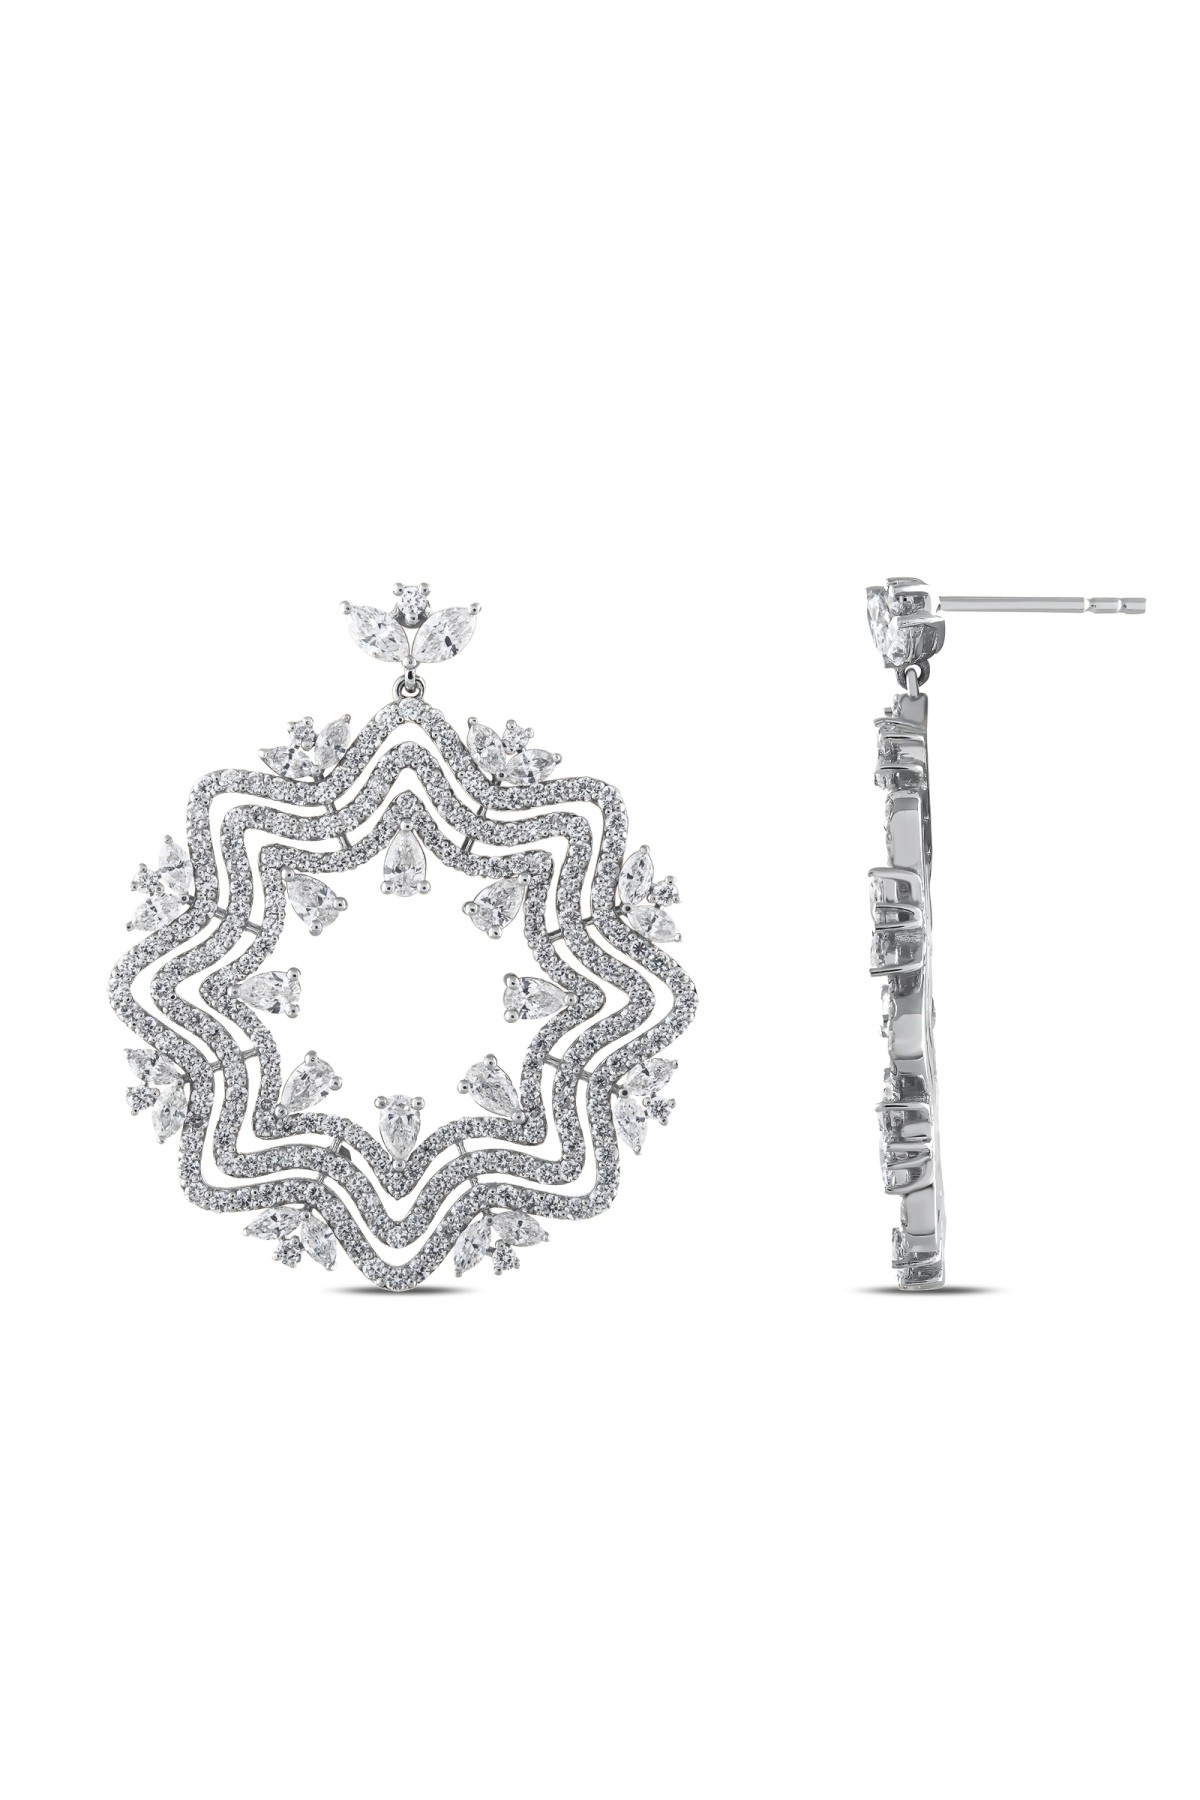 Alpay Jewellery 5,30 Karat Pırlanta Küpe